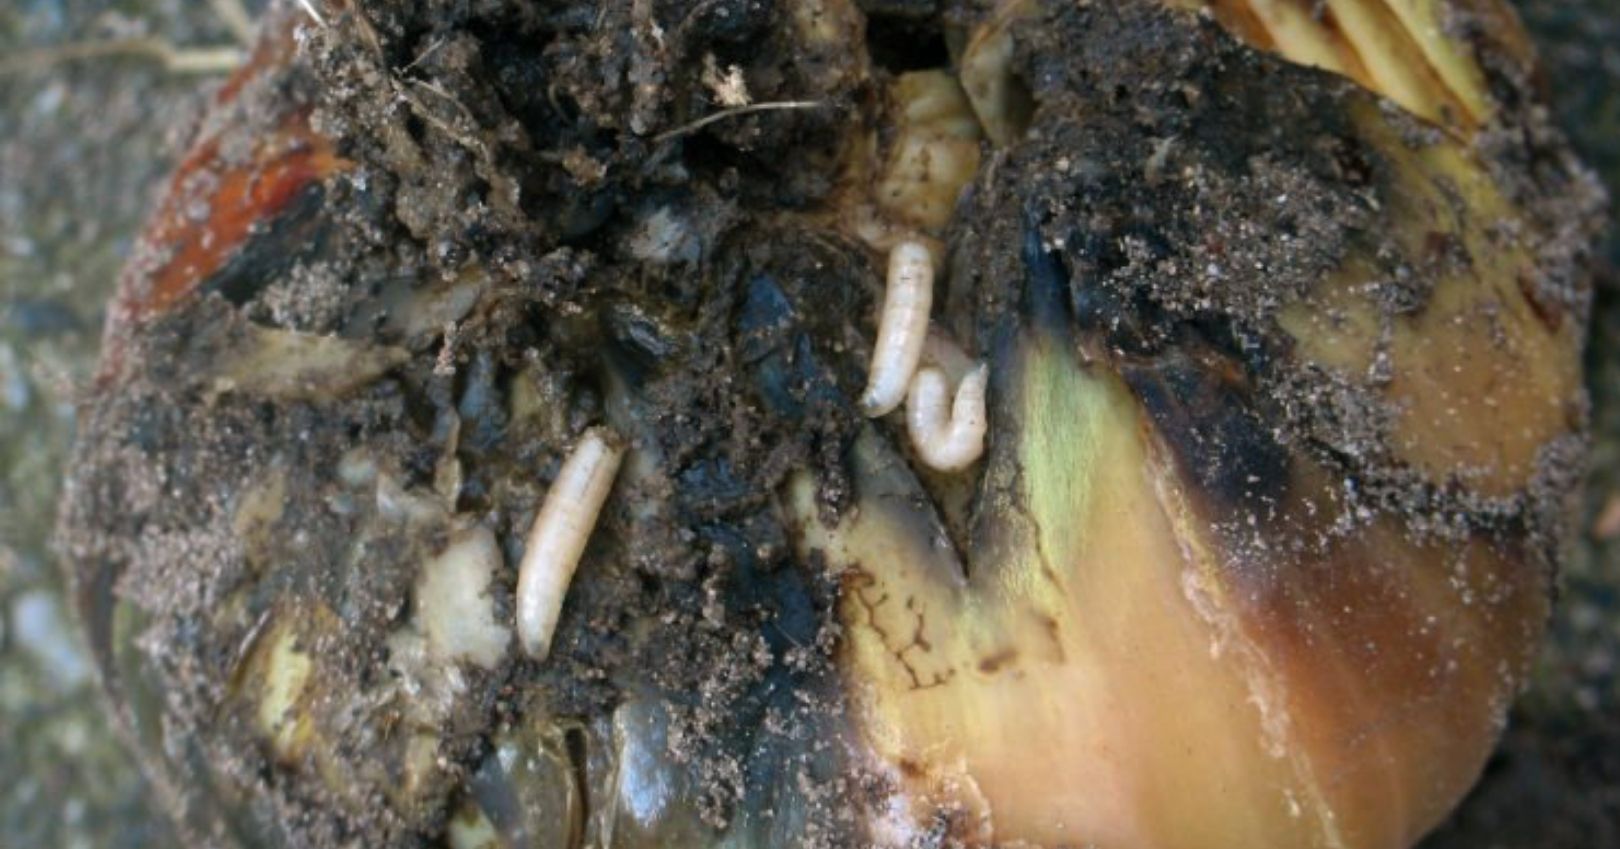 Onion Maggot Damage (Rasback, wikipedia.com)